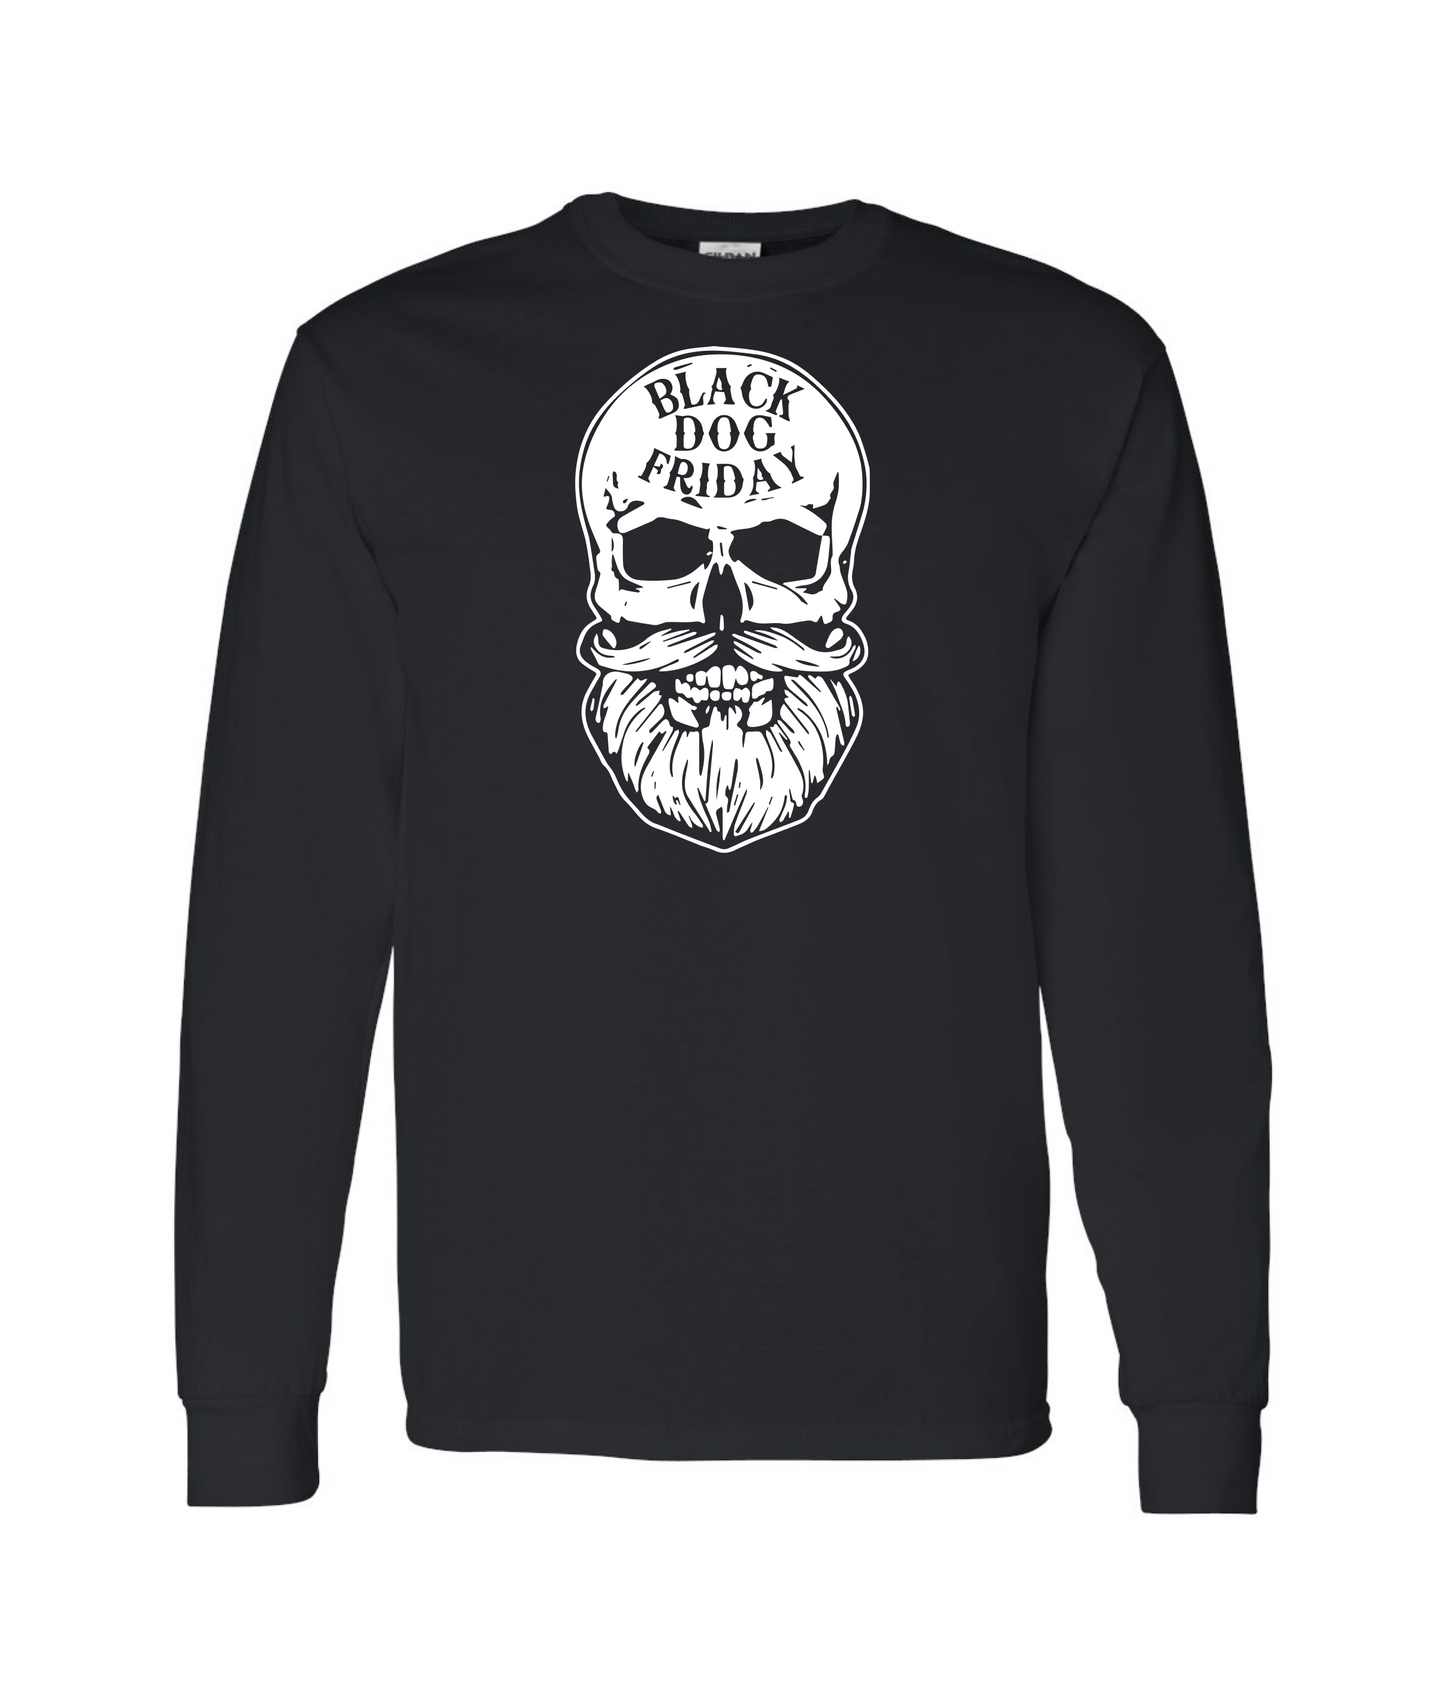 Black Dog Friday - Skull Logo - Black Long Sleeve T